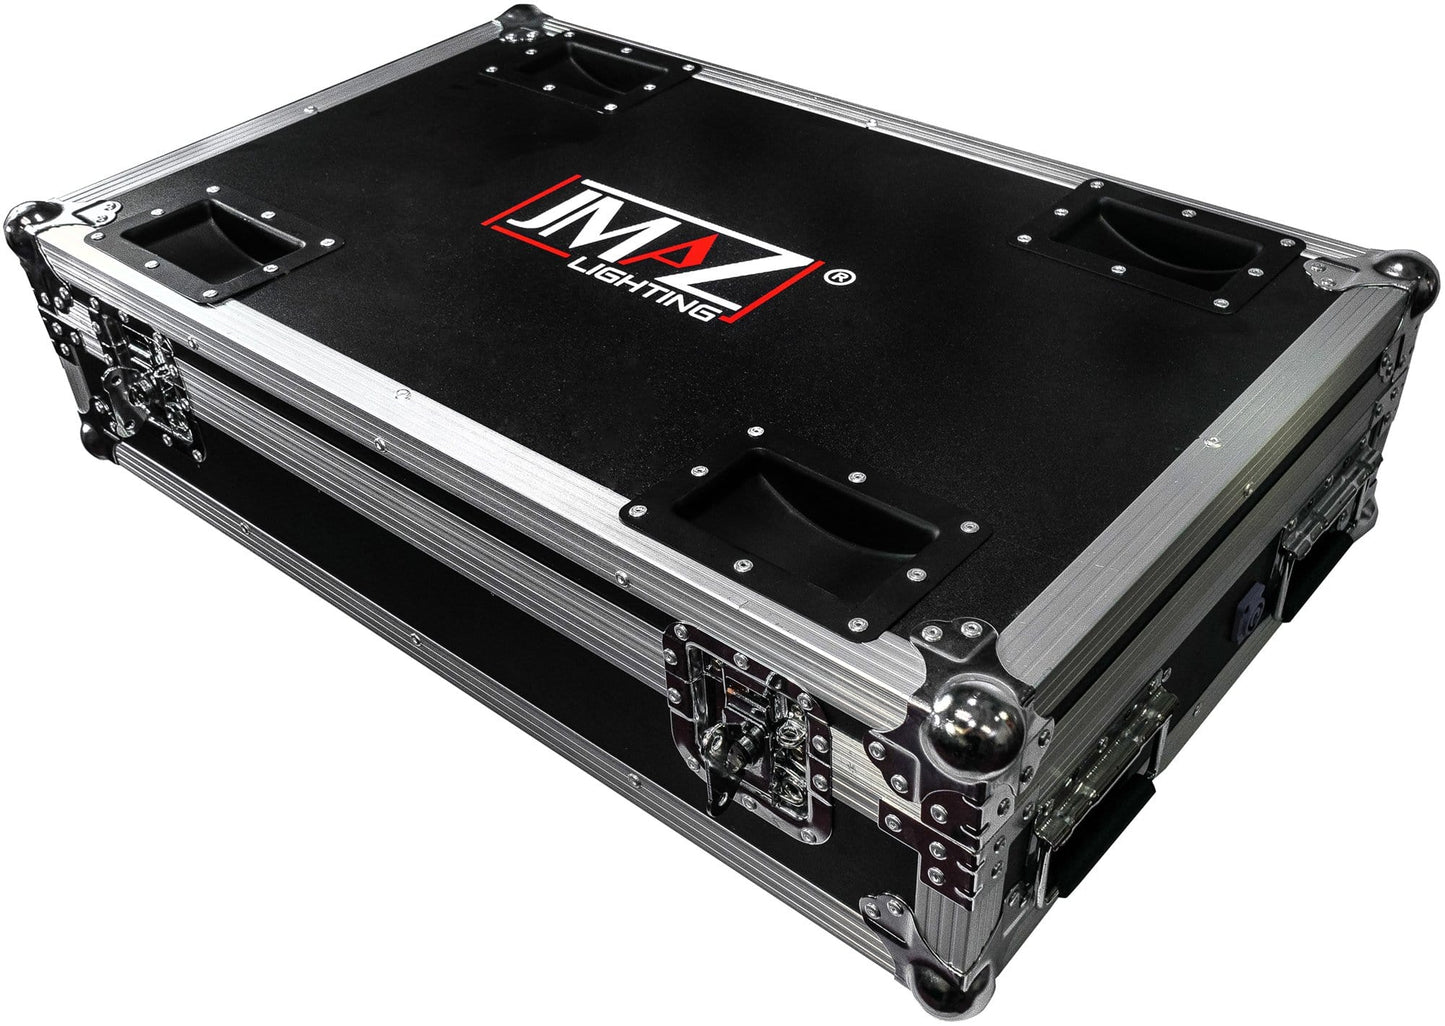 JMAZ Mad Par HEX 4S 10 Pack w Case Black - ProSound and Stage Lighting